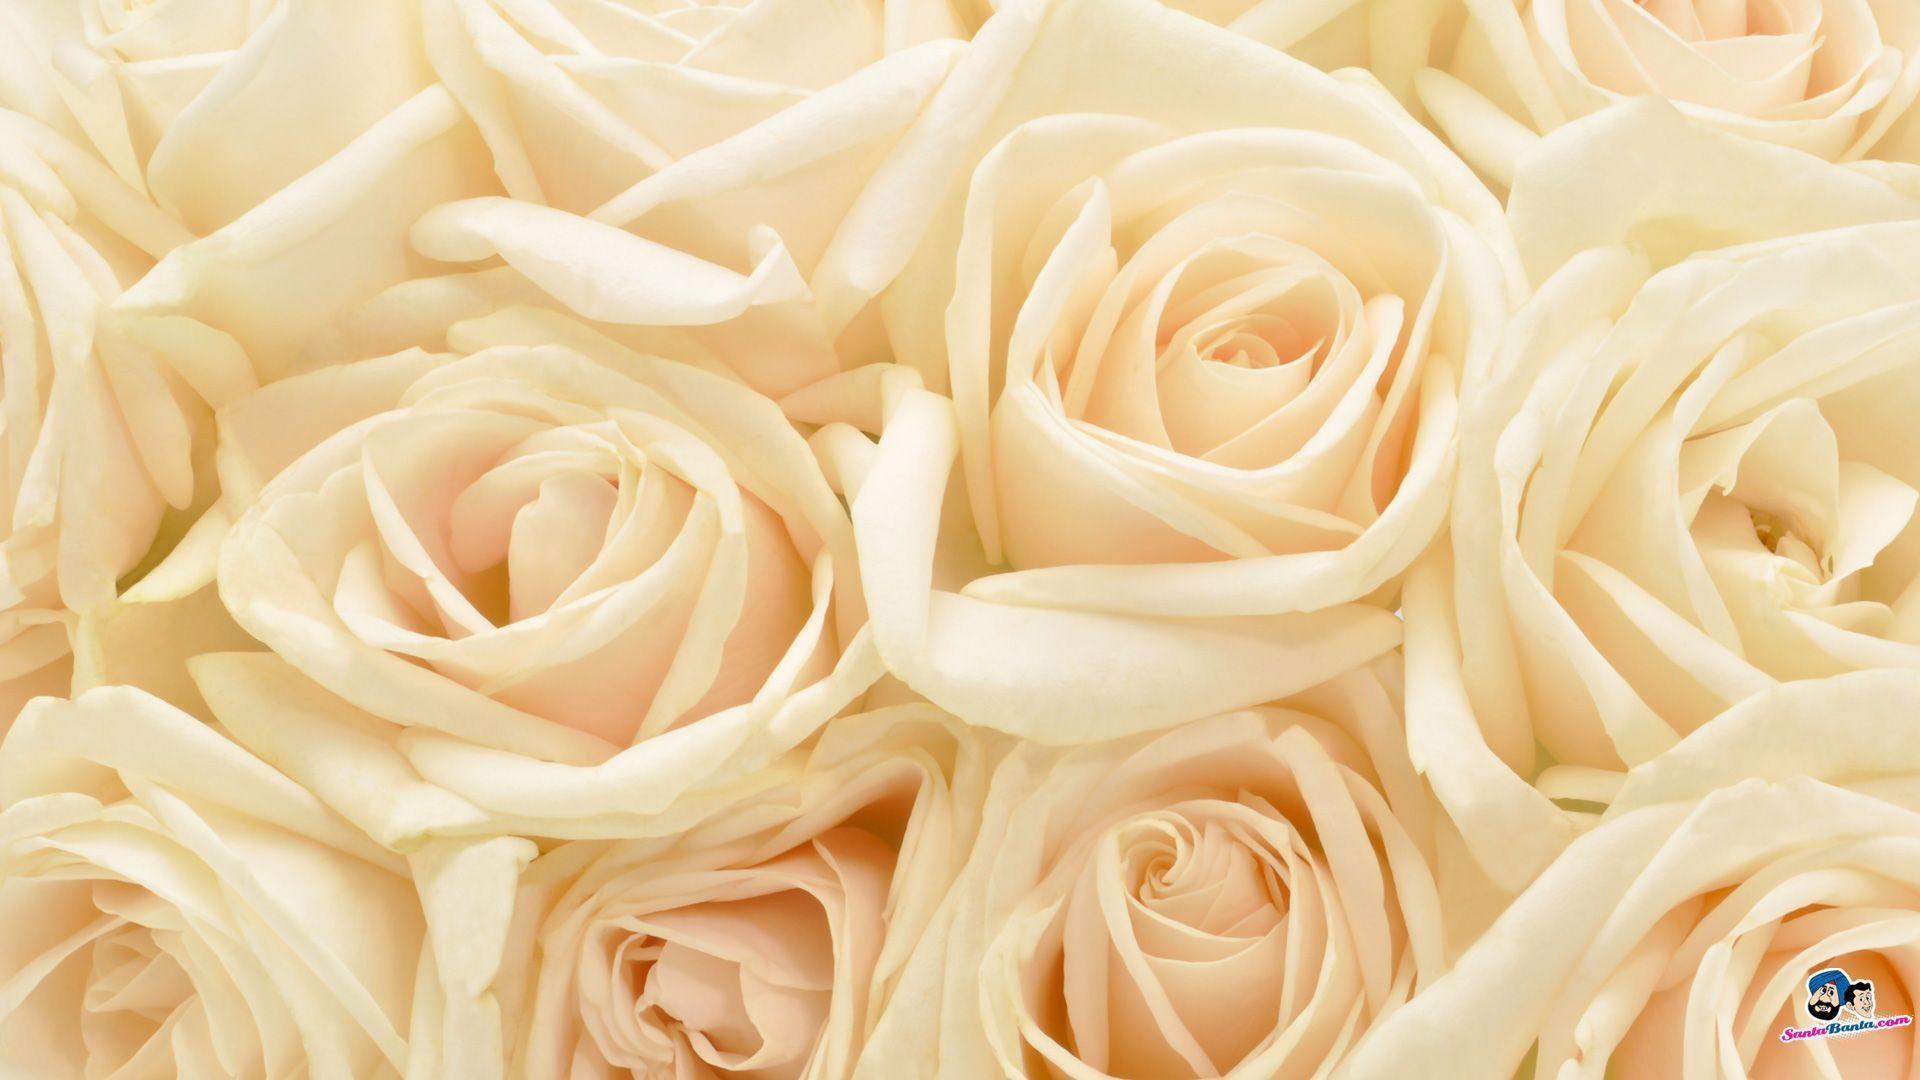 White Rose Background